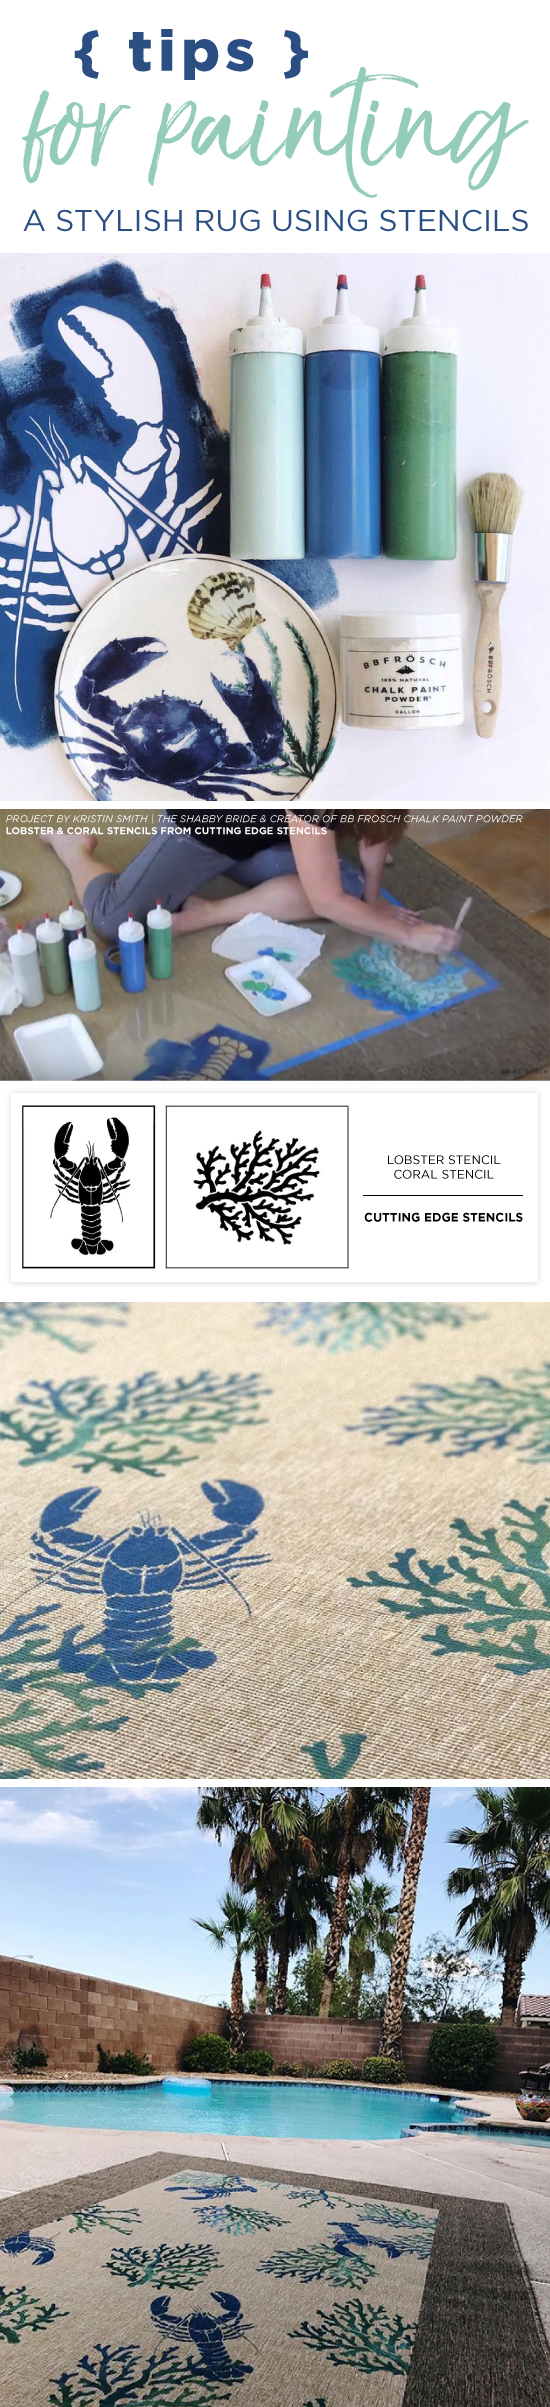 Cutting Edge Stencils shares a DIY Ikea rug makeover using Nautical Stencils including the lobster and coral pattern. http://www.cuttingedgestencils.com/beach-decor-stencils-designs-nautical.html